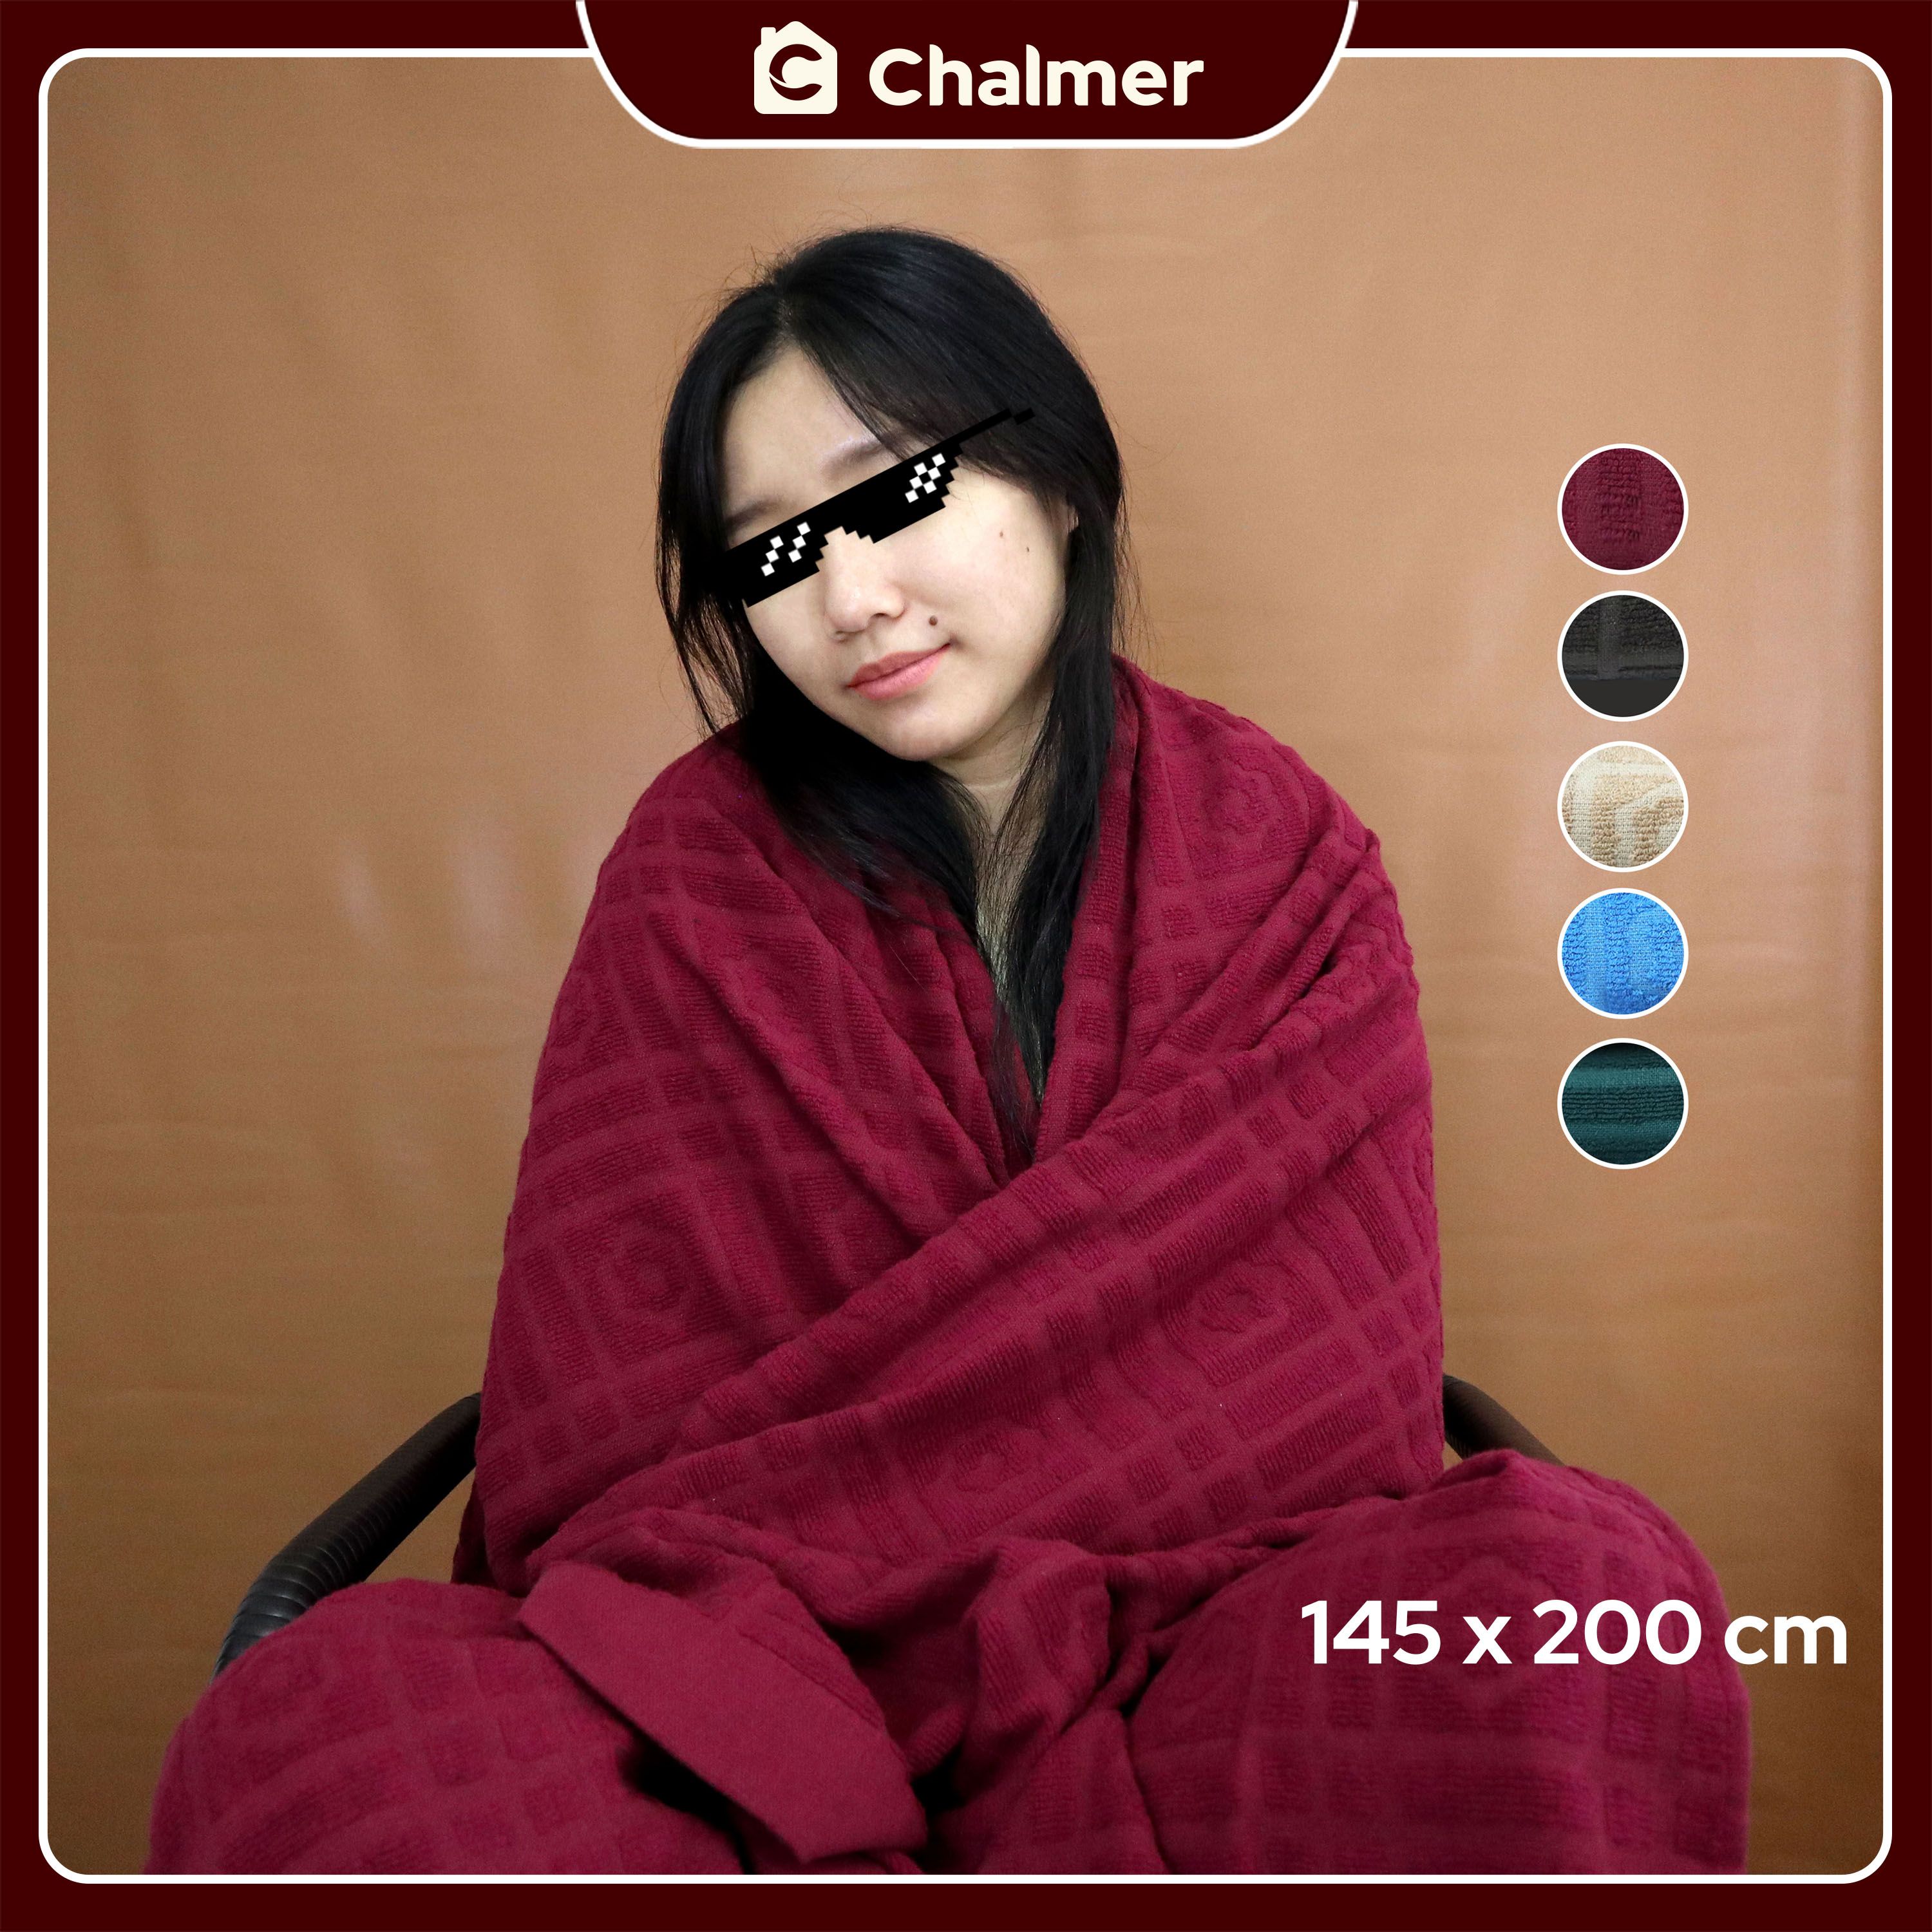 Selimut Katun Merek Chalmer Ukuran 145x200 Terry Cloth Towel Blanket - Dark Green - 2